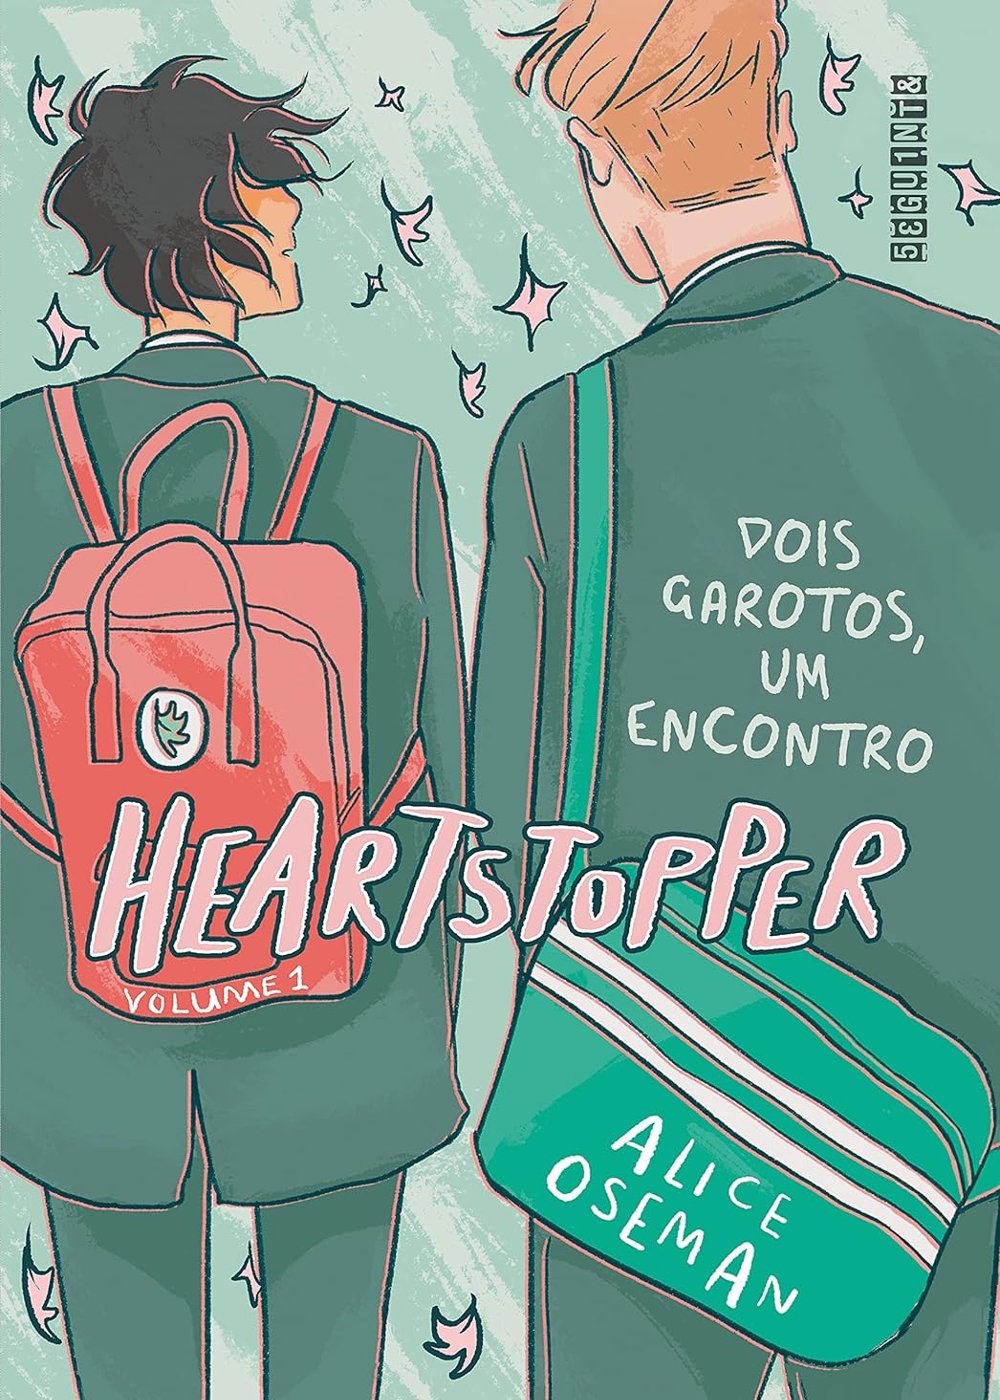 Heartstopper - livros de romance lgbtqia+ - dicas - estante - publi - https://stealthelook.com.br